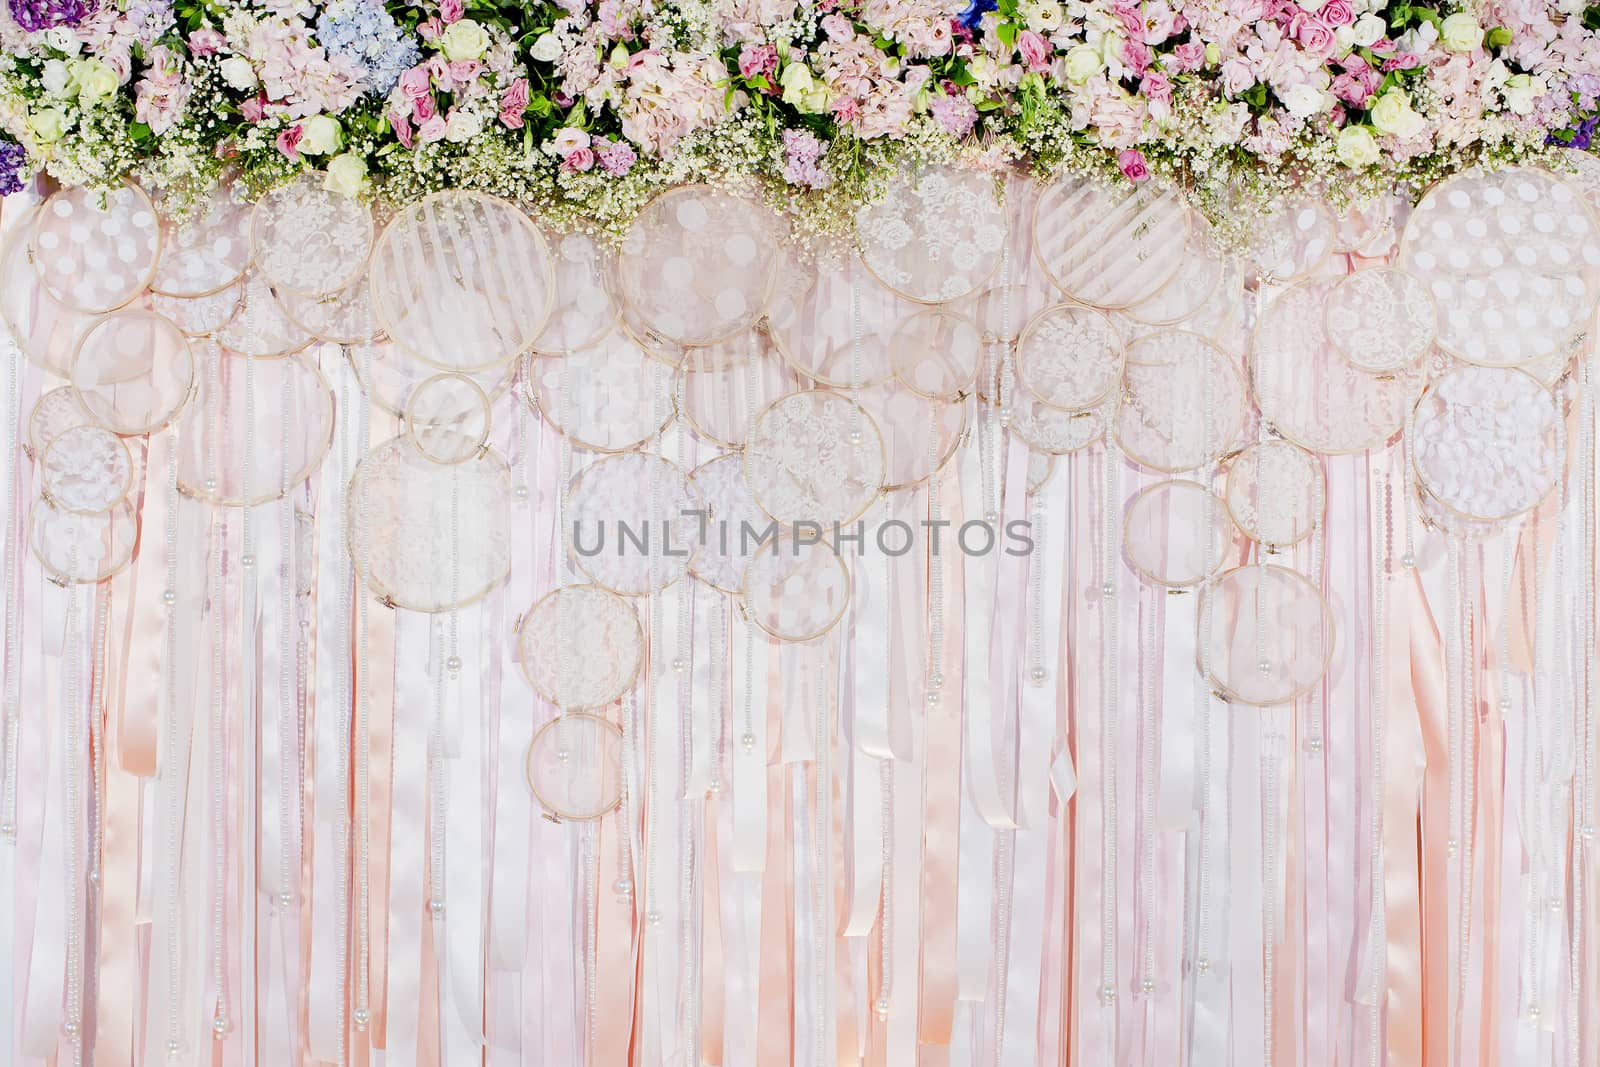 Beautiful flowers background for wedding scene by art9858